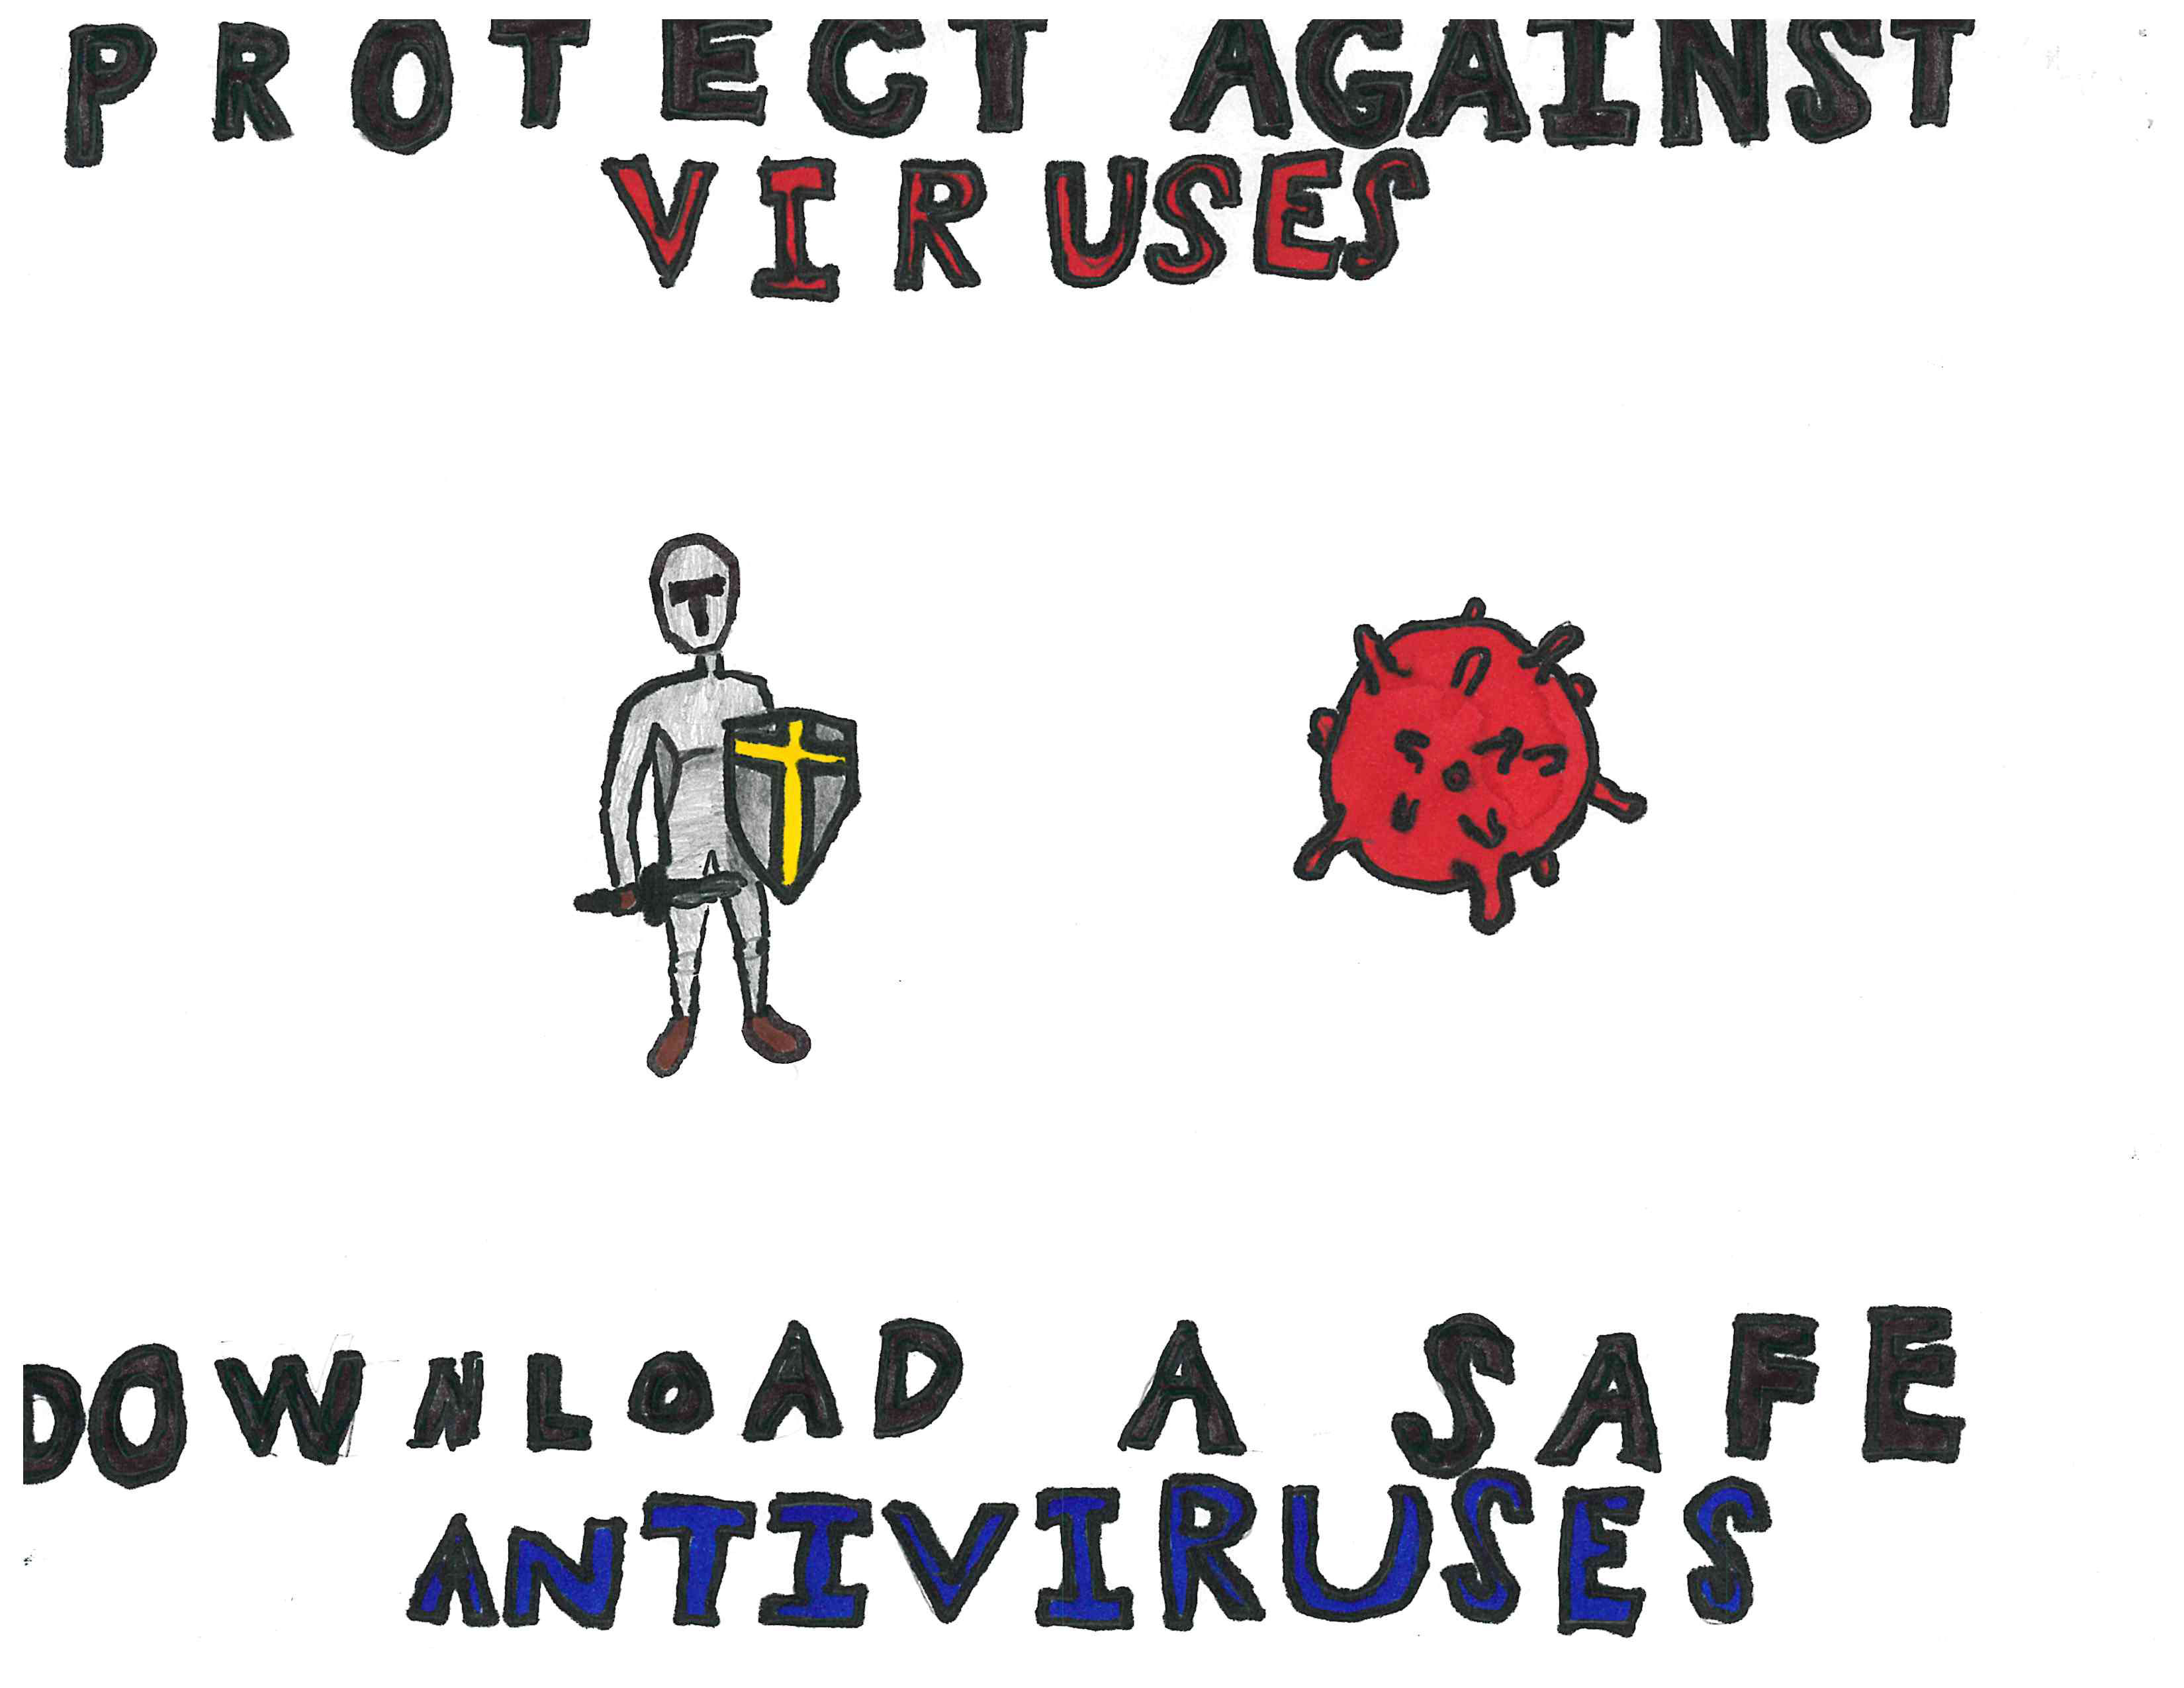 44 Protect Against Viruses